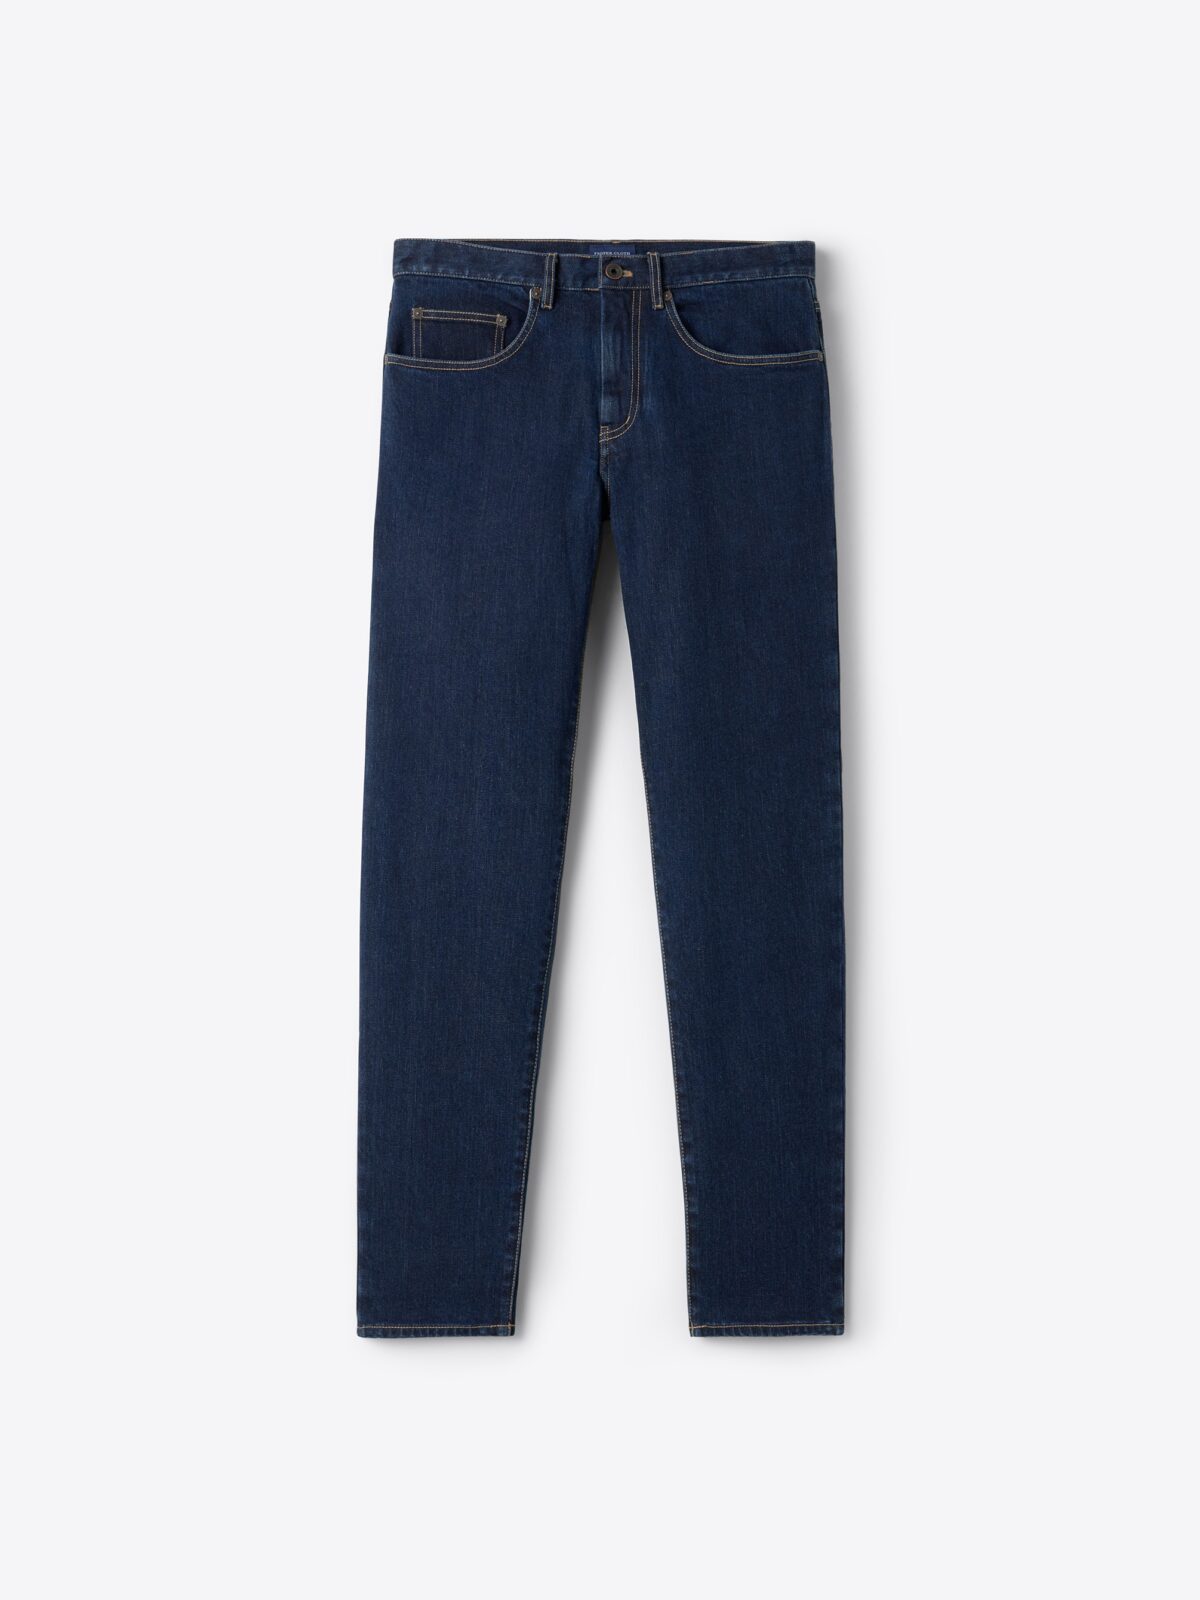 Japanese 12oz Rinse Wash Indigo Stretch Jeans - Custom Fit Pants